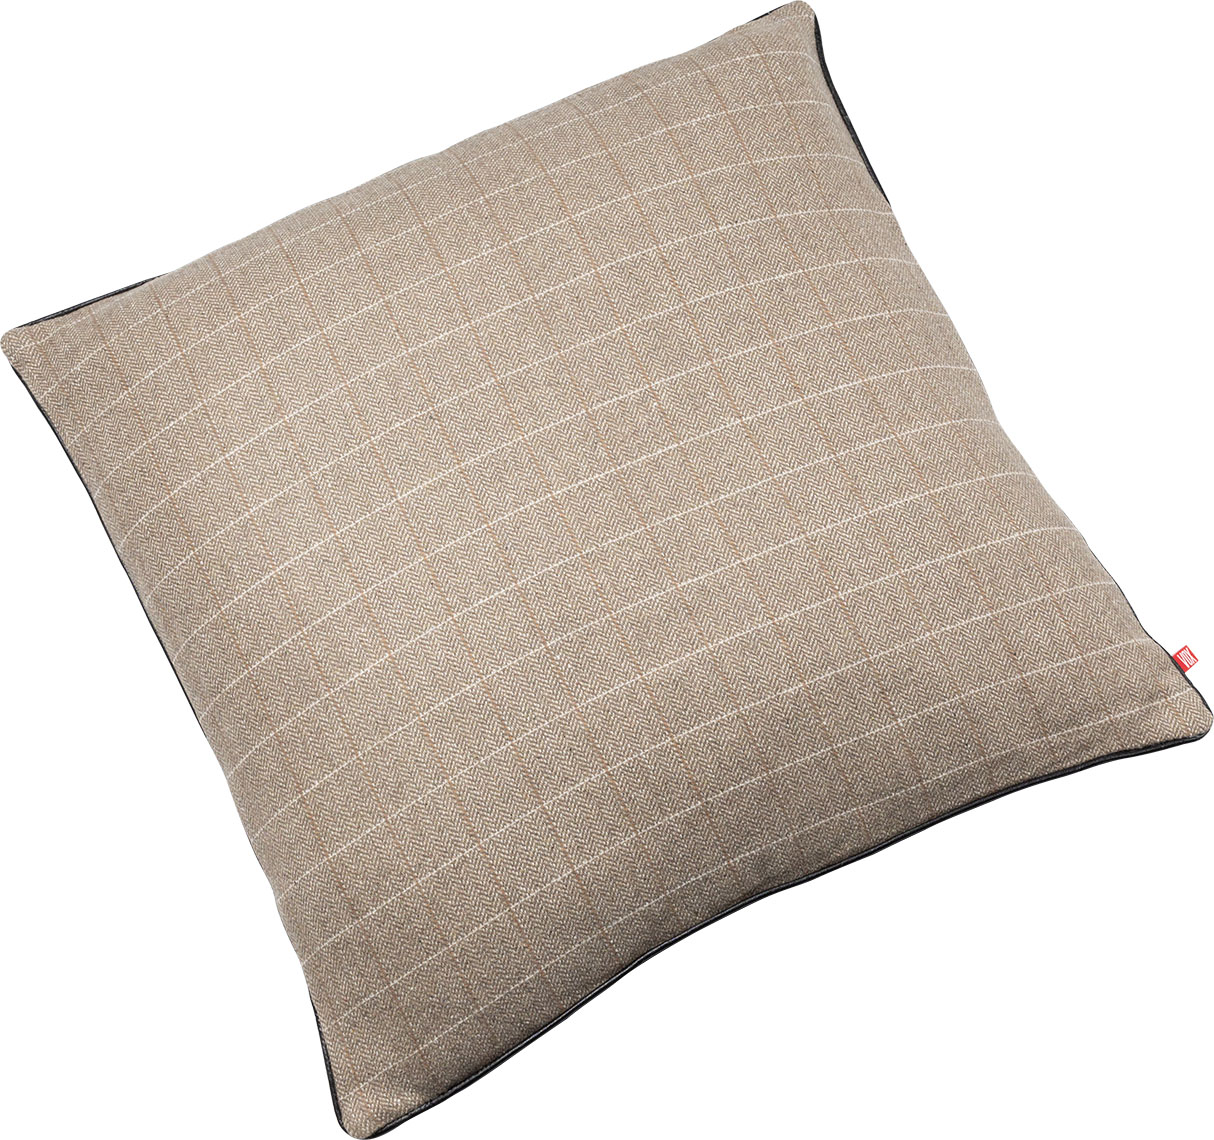 Large square pillow Etris